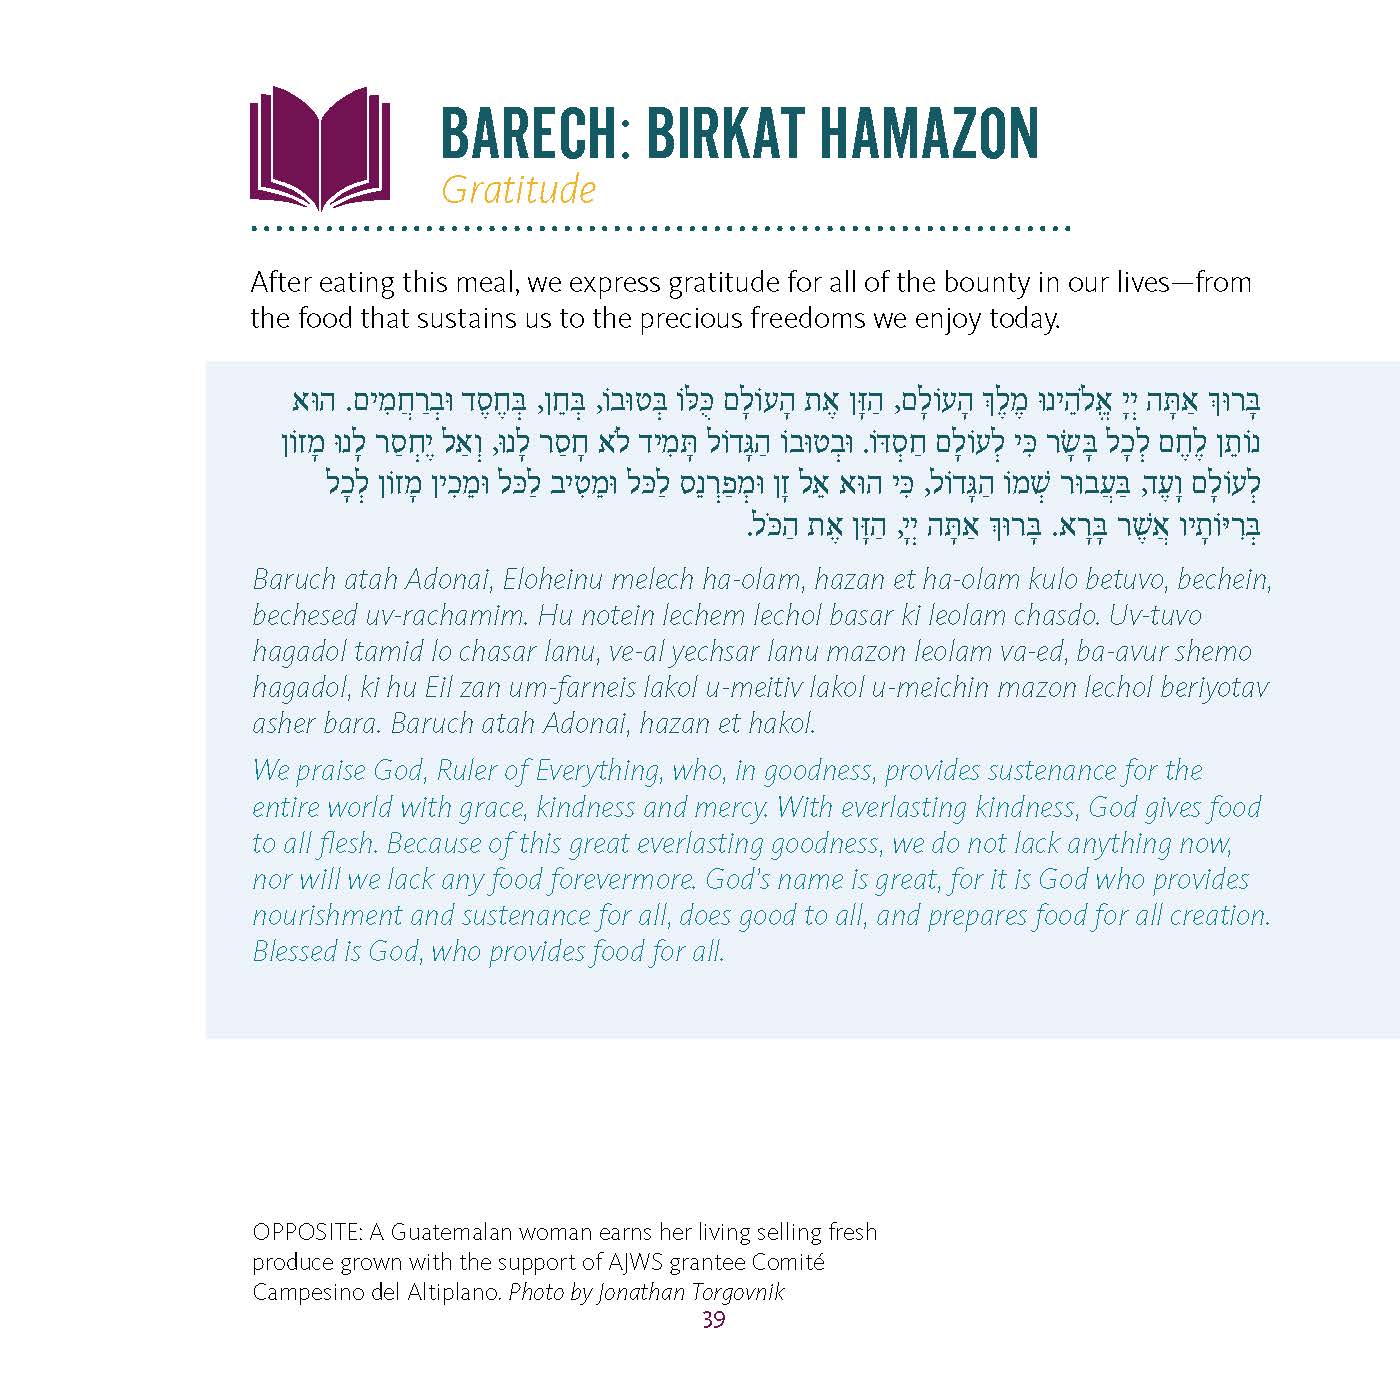 Barech: Birkat Hamazon